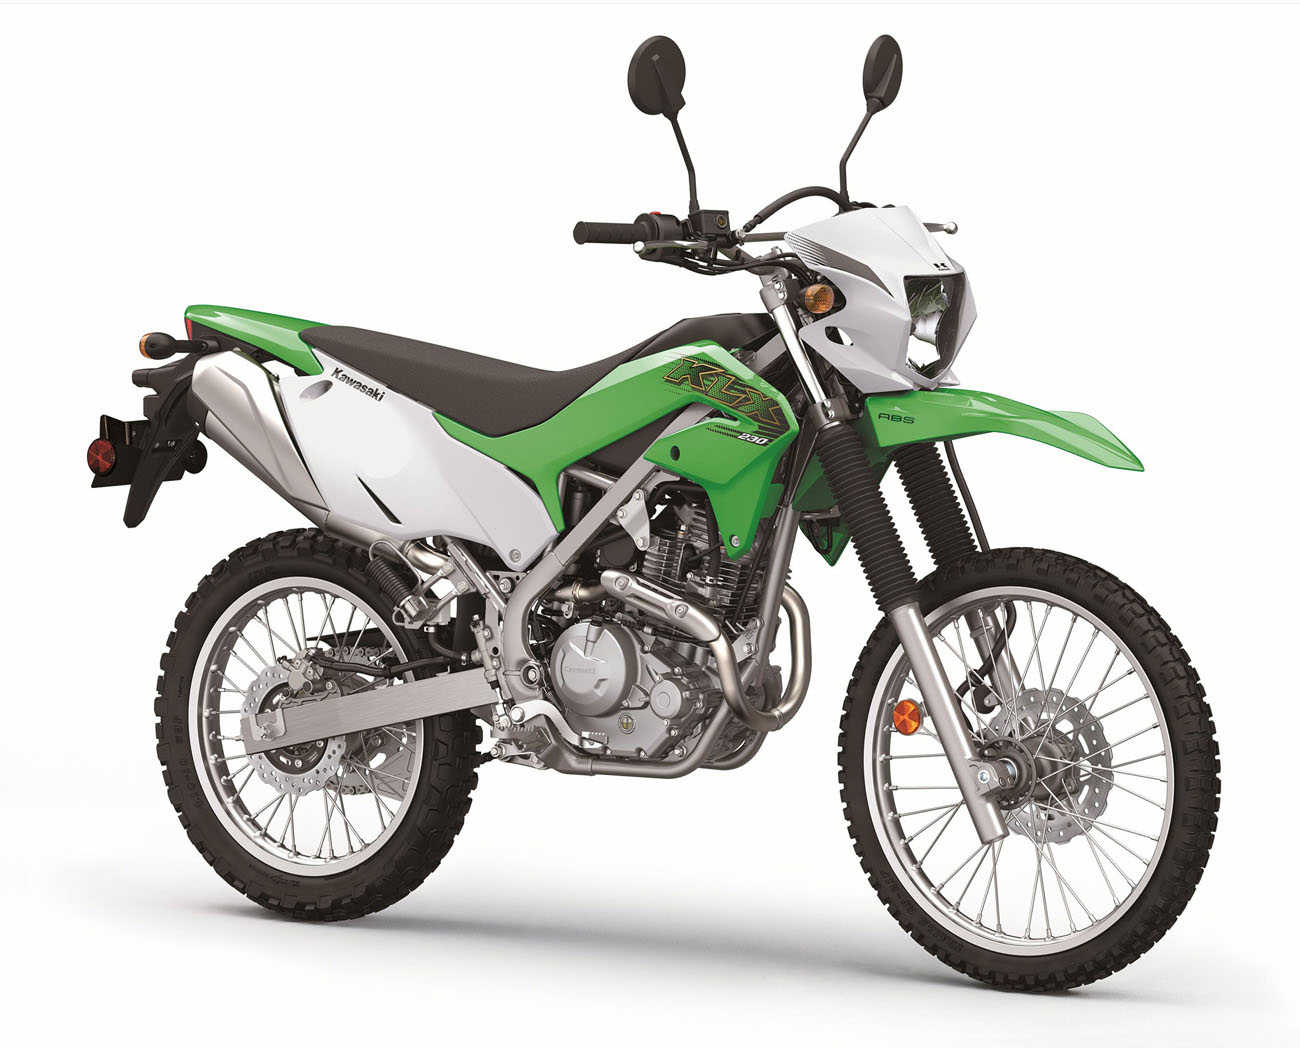 Kawasaki KLX 230 technical specifications